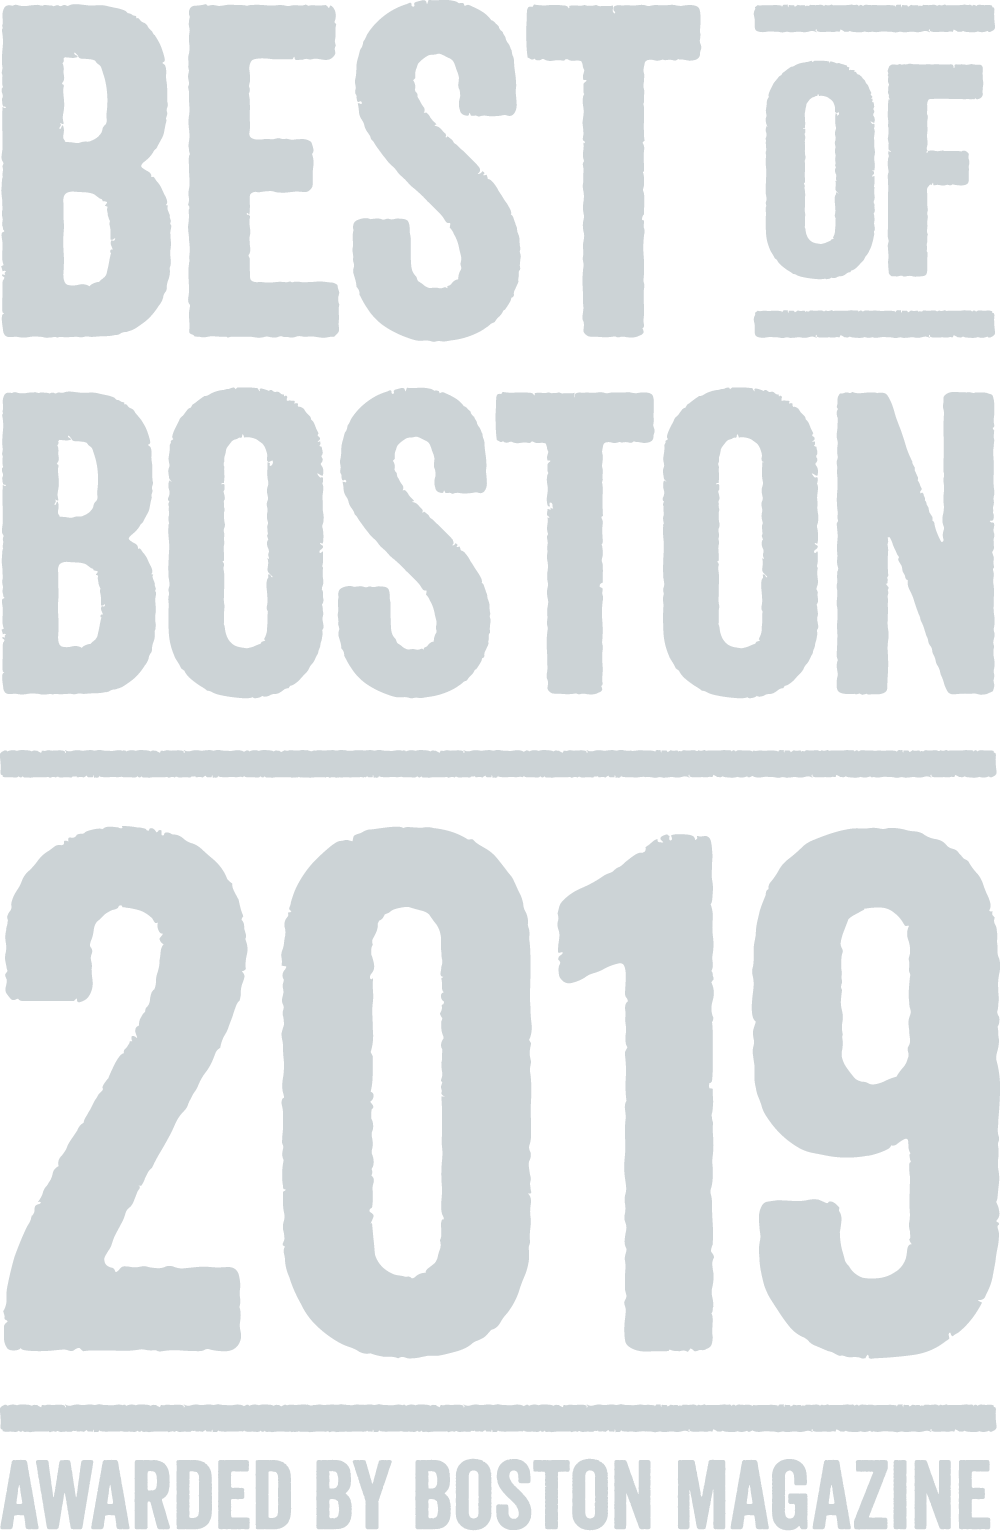 Best of Boston 2019